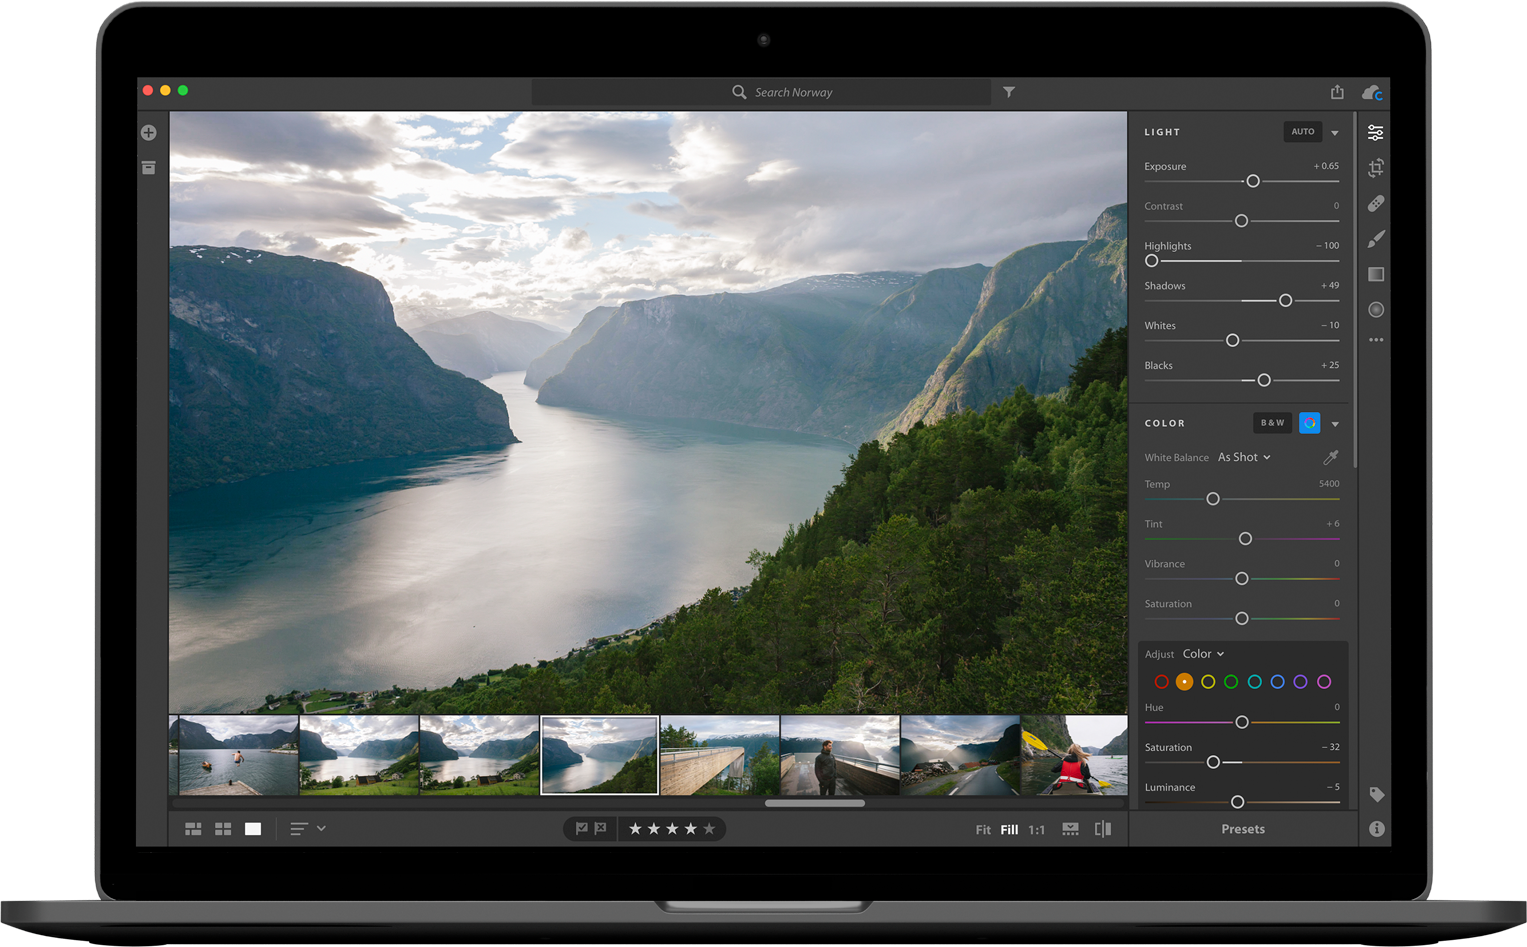 Adobe Photoshop Lightroom Cc 2015.9 For Mac